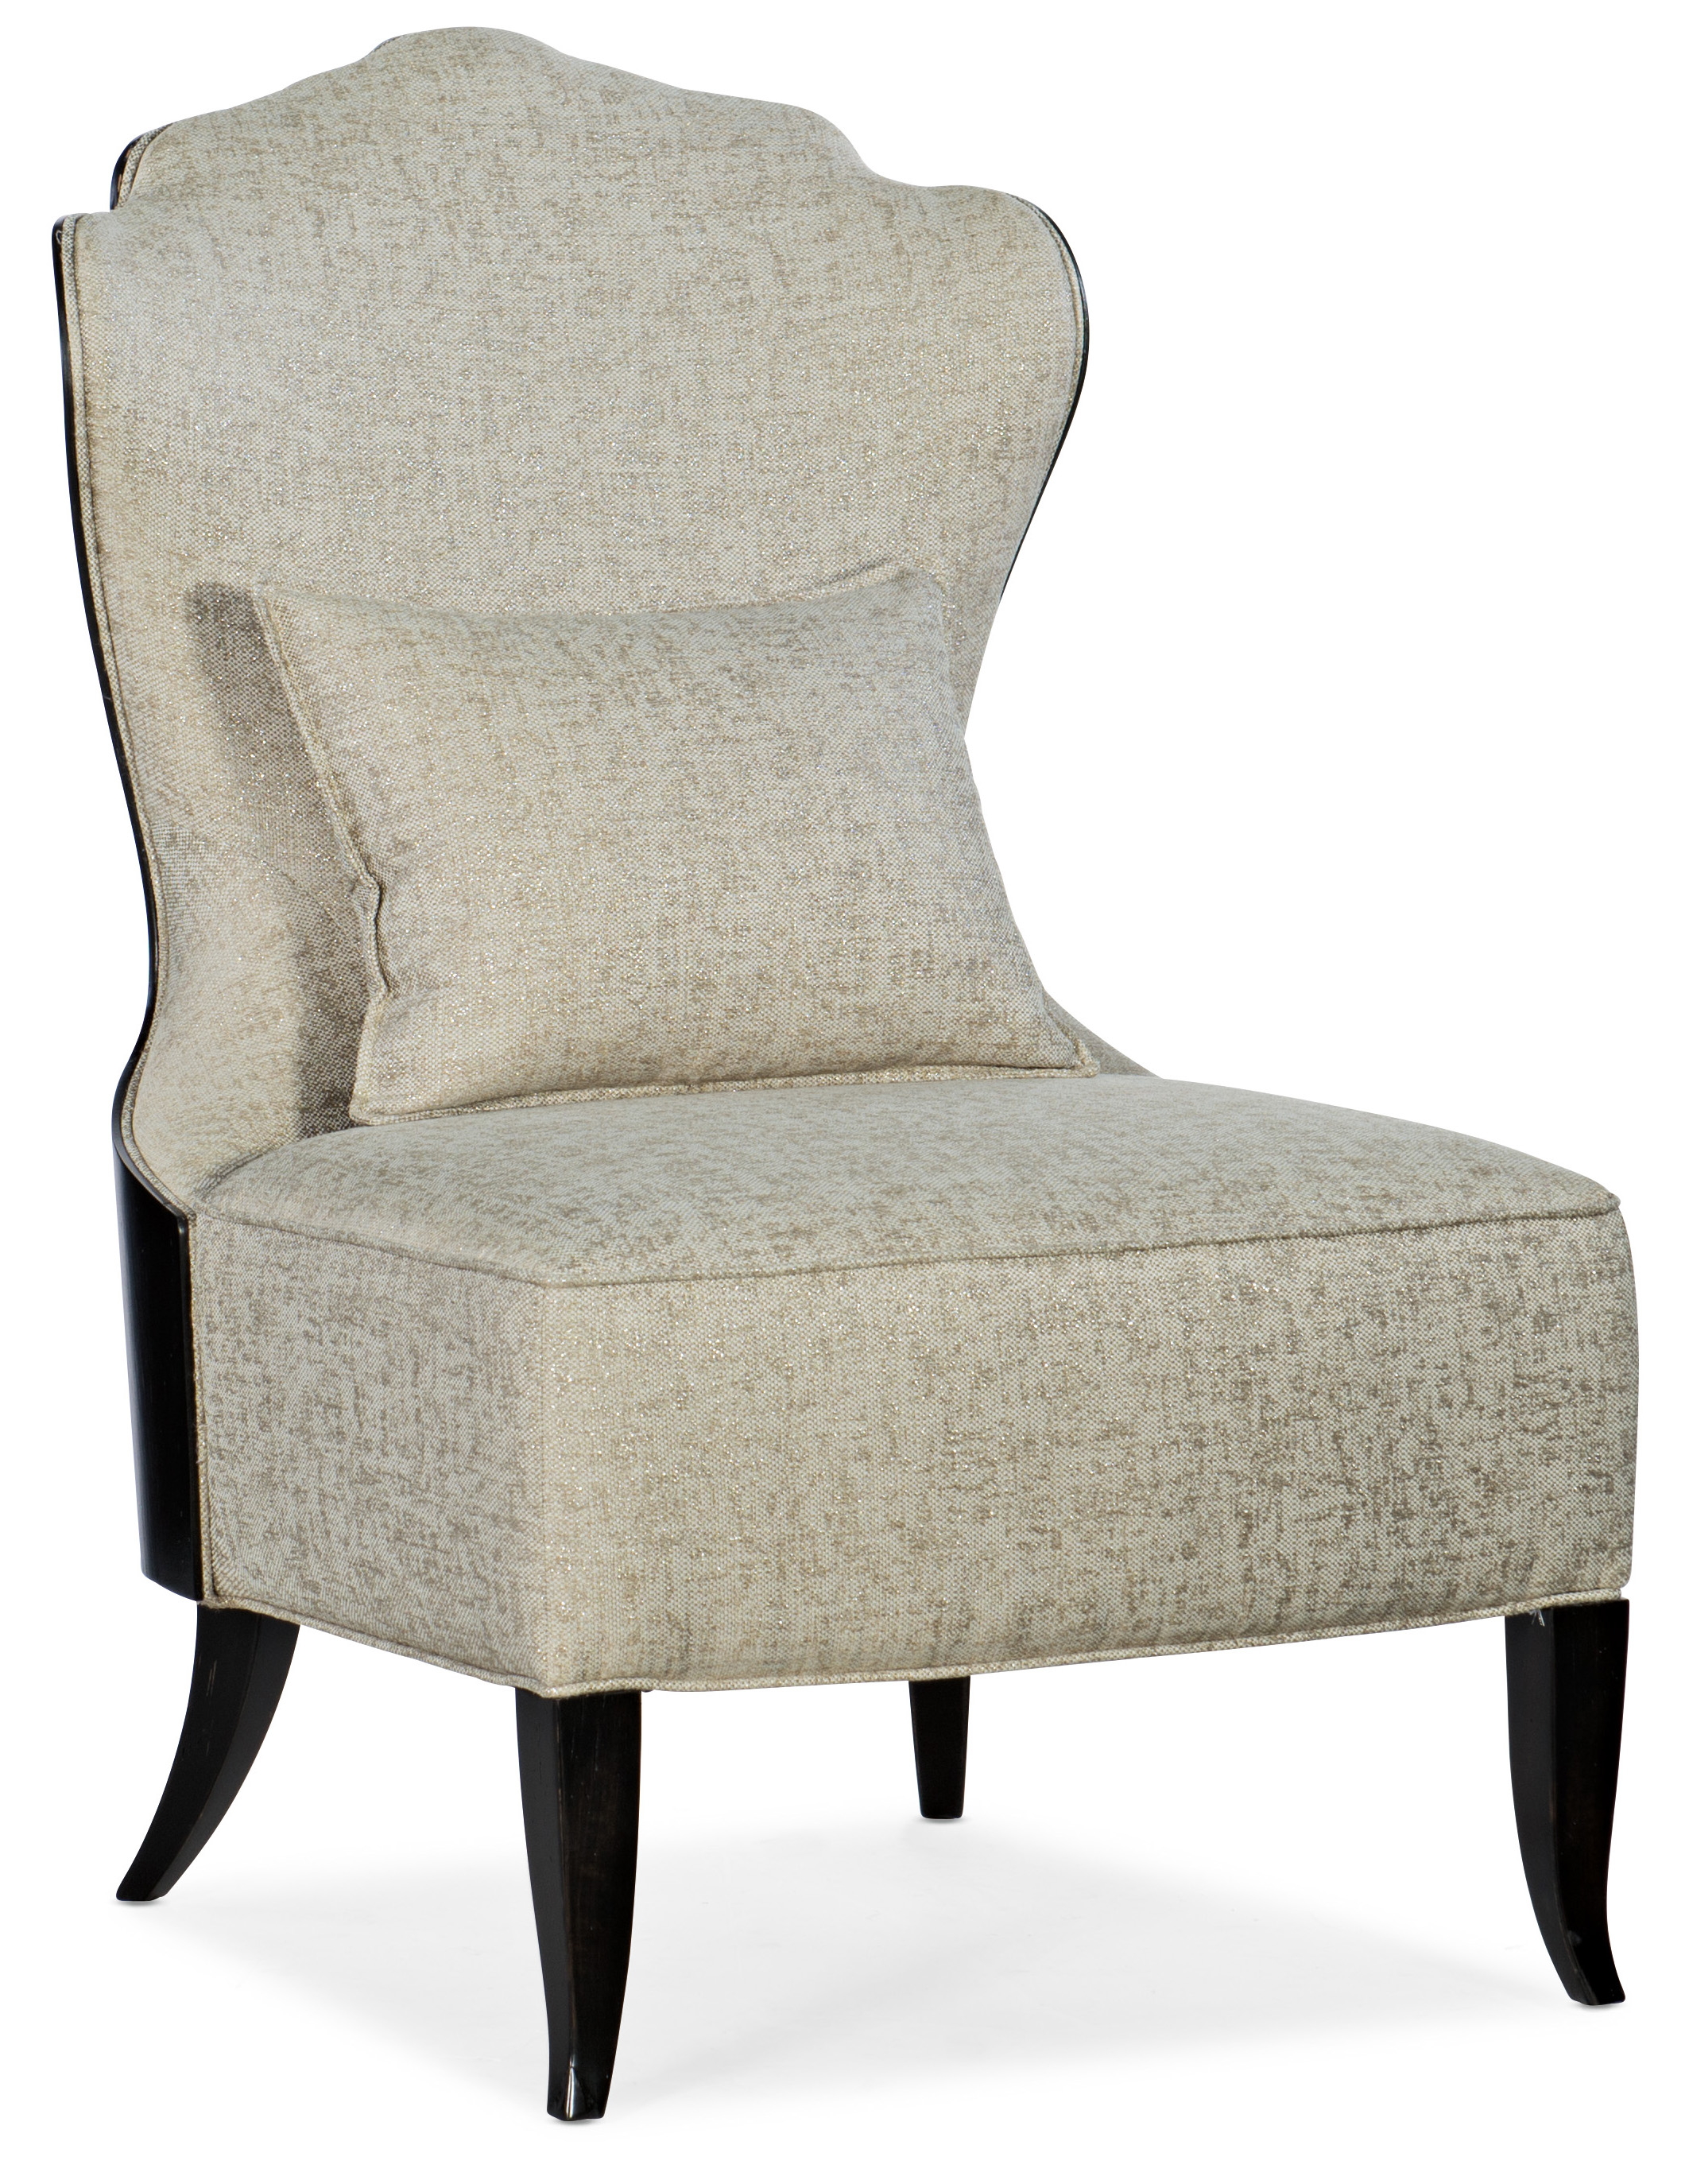 Picture of Belle Fleur Slipper Chair